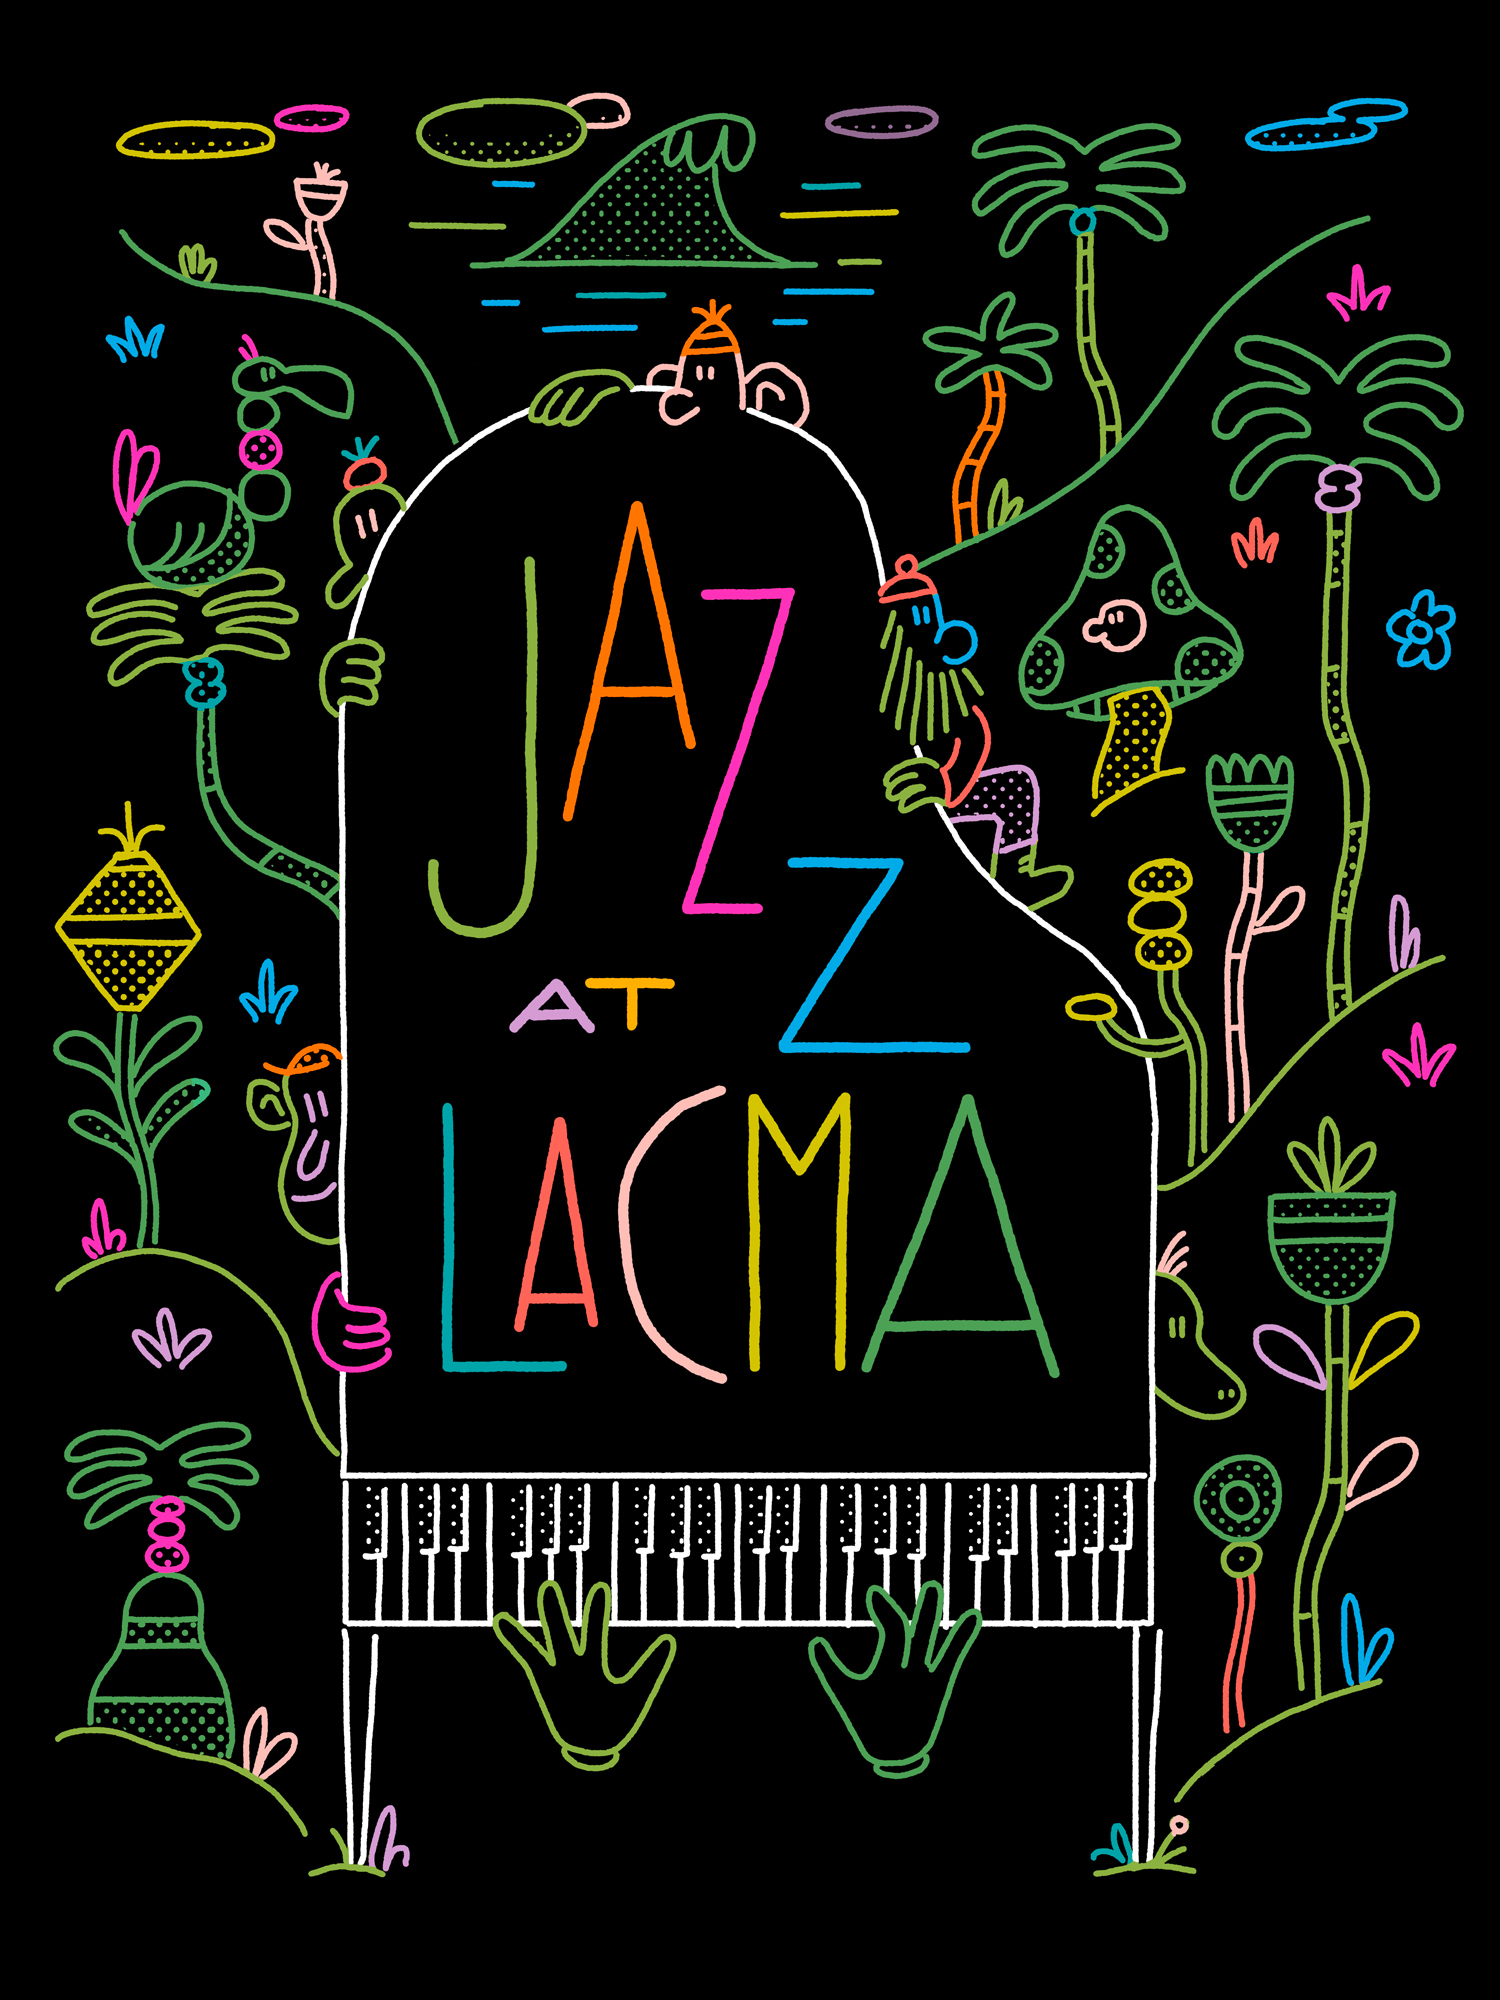 Jazz at LACMA — Daniel Savage